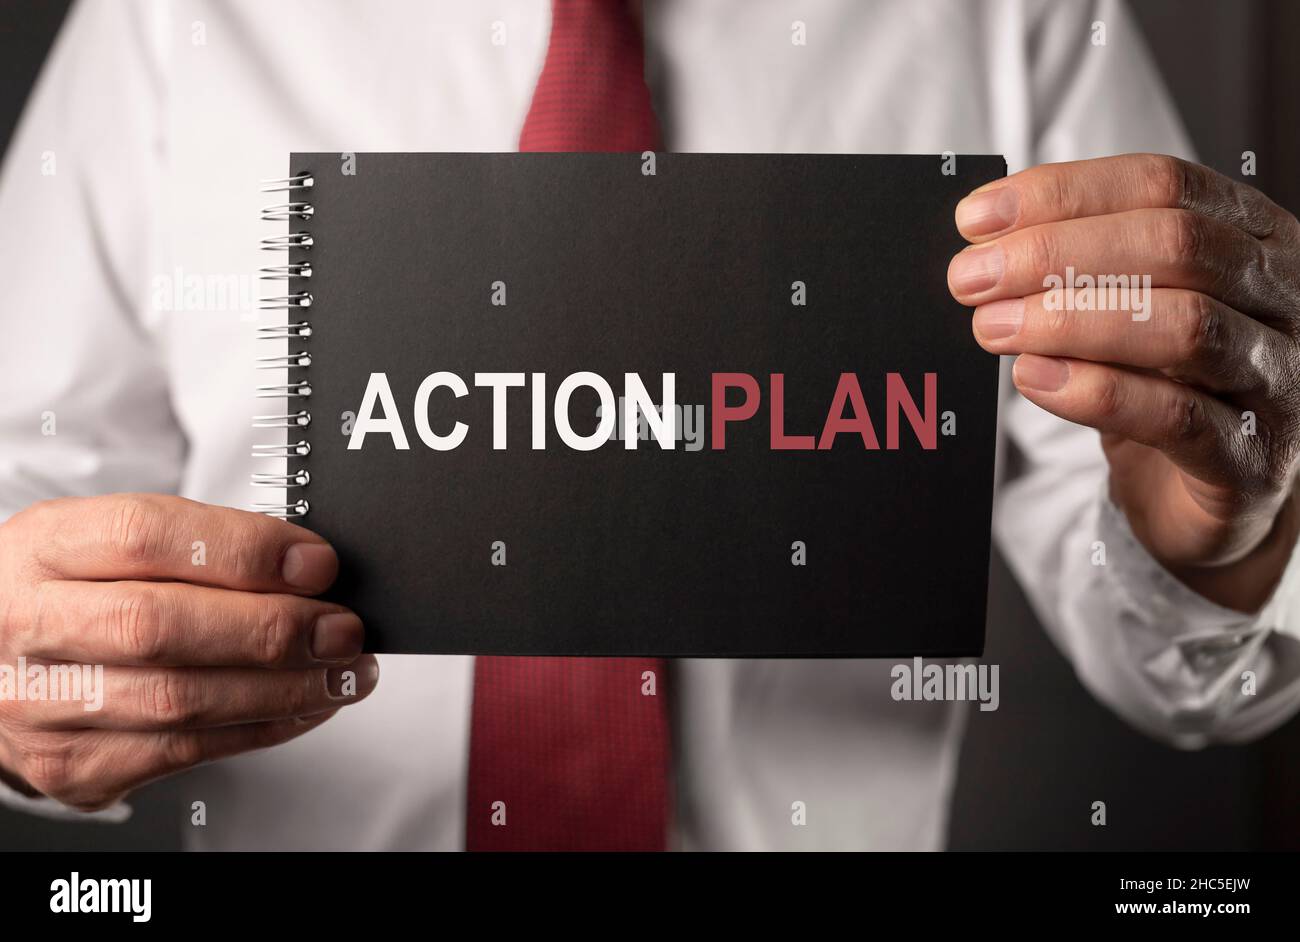 Action plan concept. Business strategic planning handbook. Stock Photo